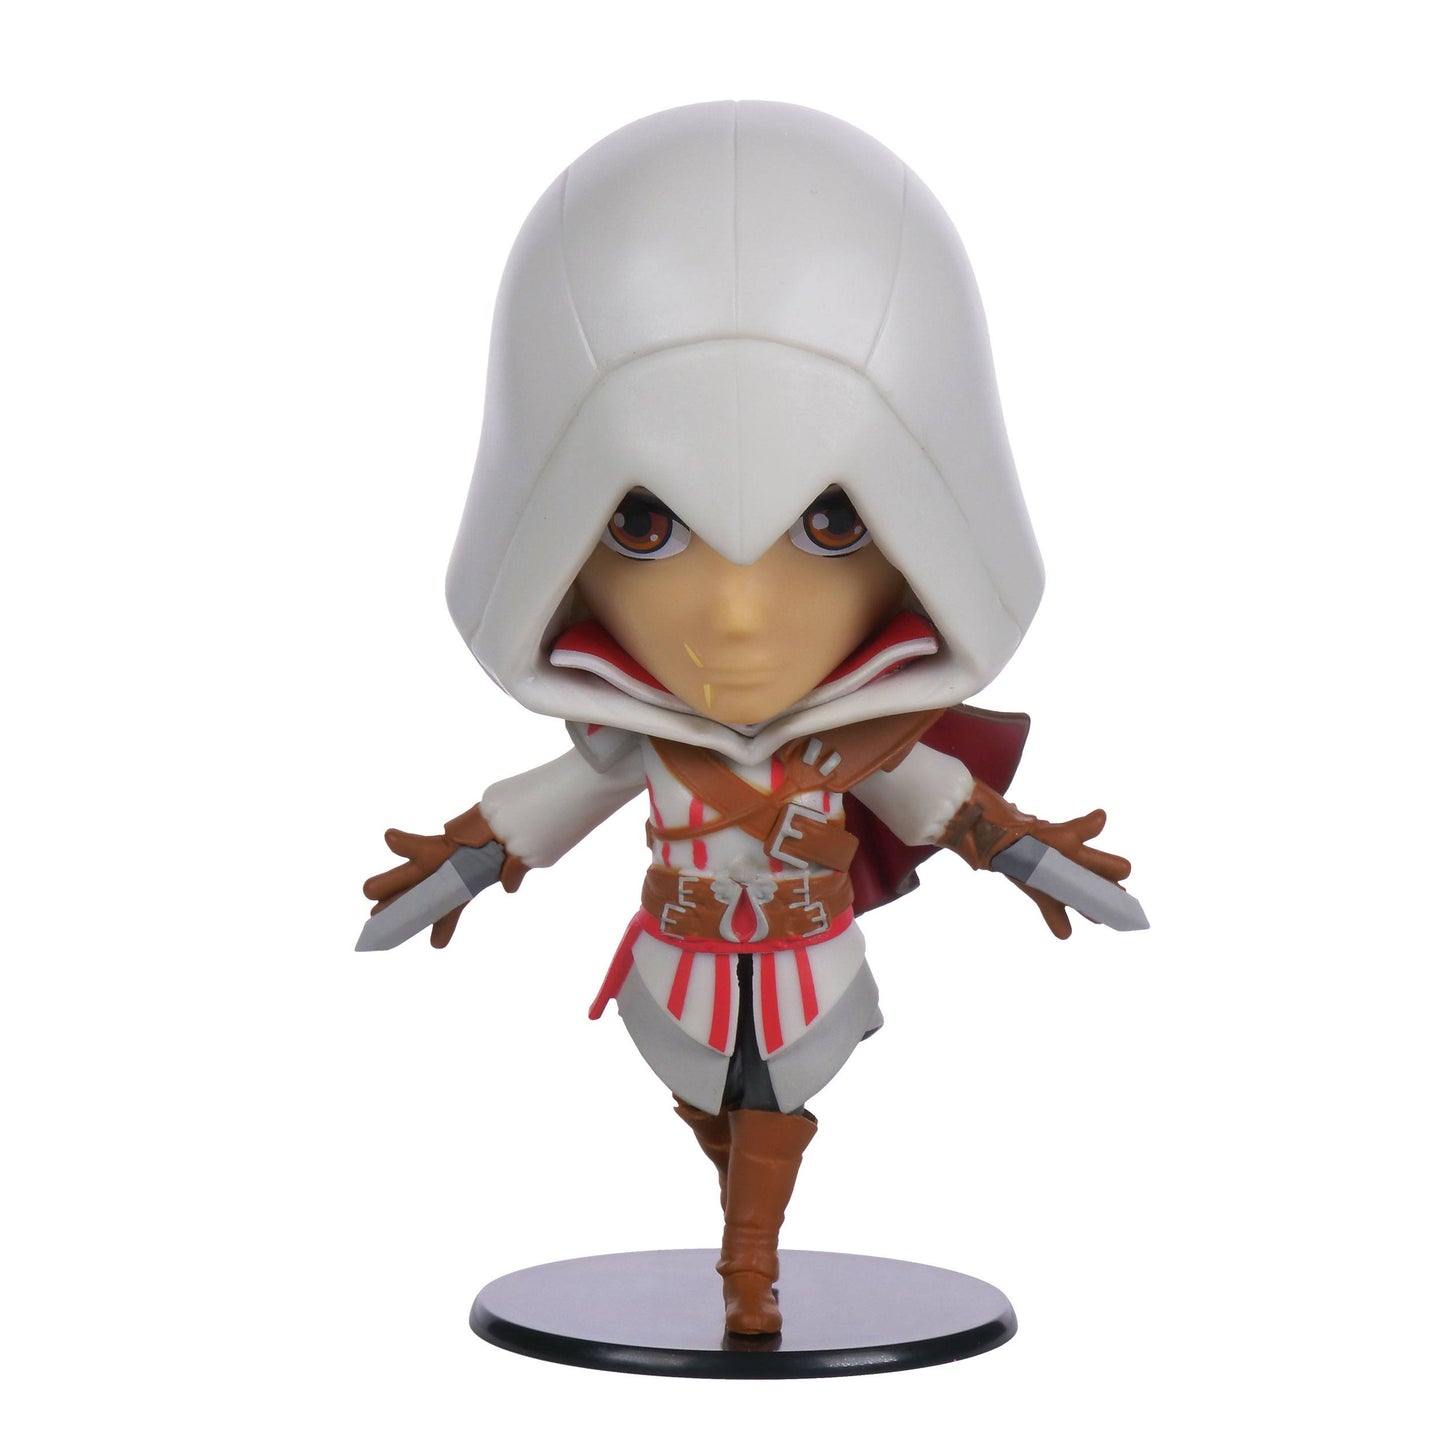 UBI HEROES Chibi Assassin's Creed Ezio Figurine Series 1 UBICollectibles Chibi Ezio